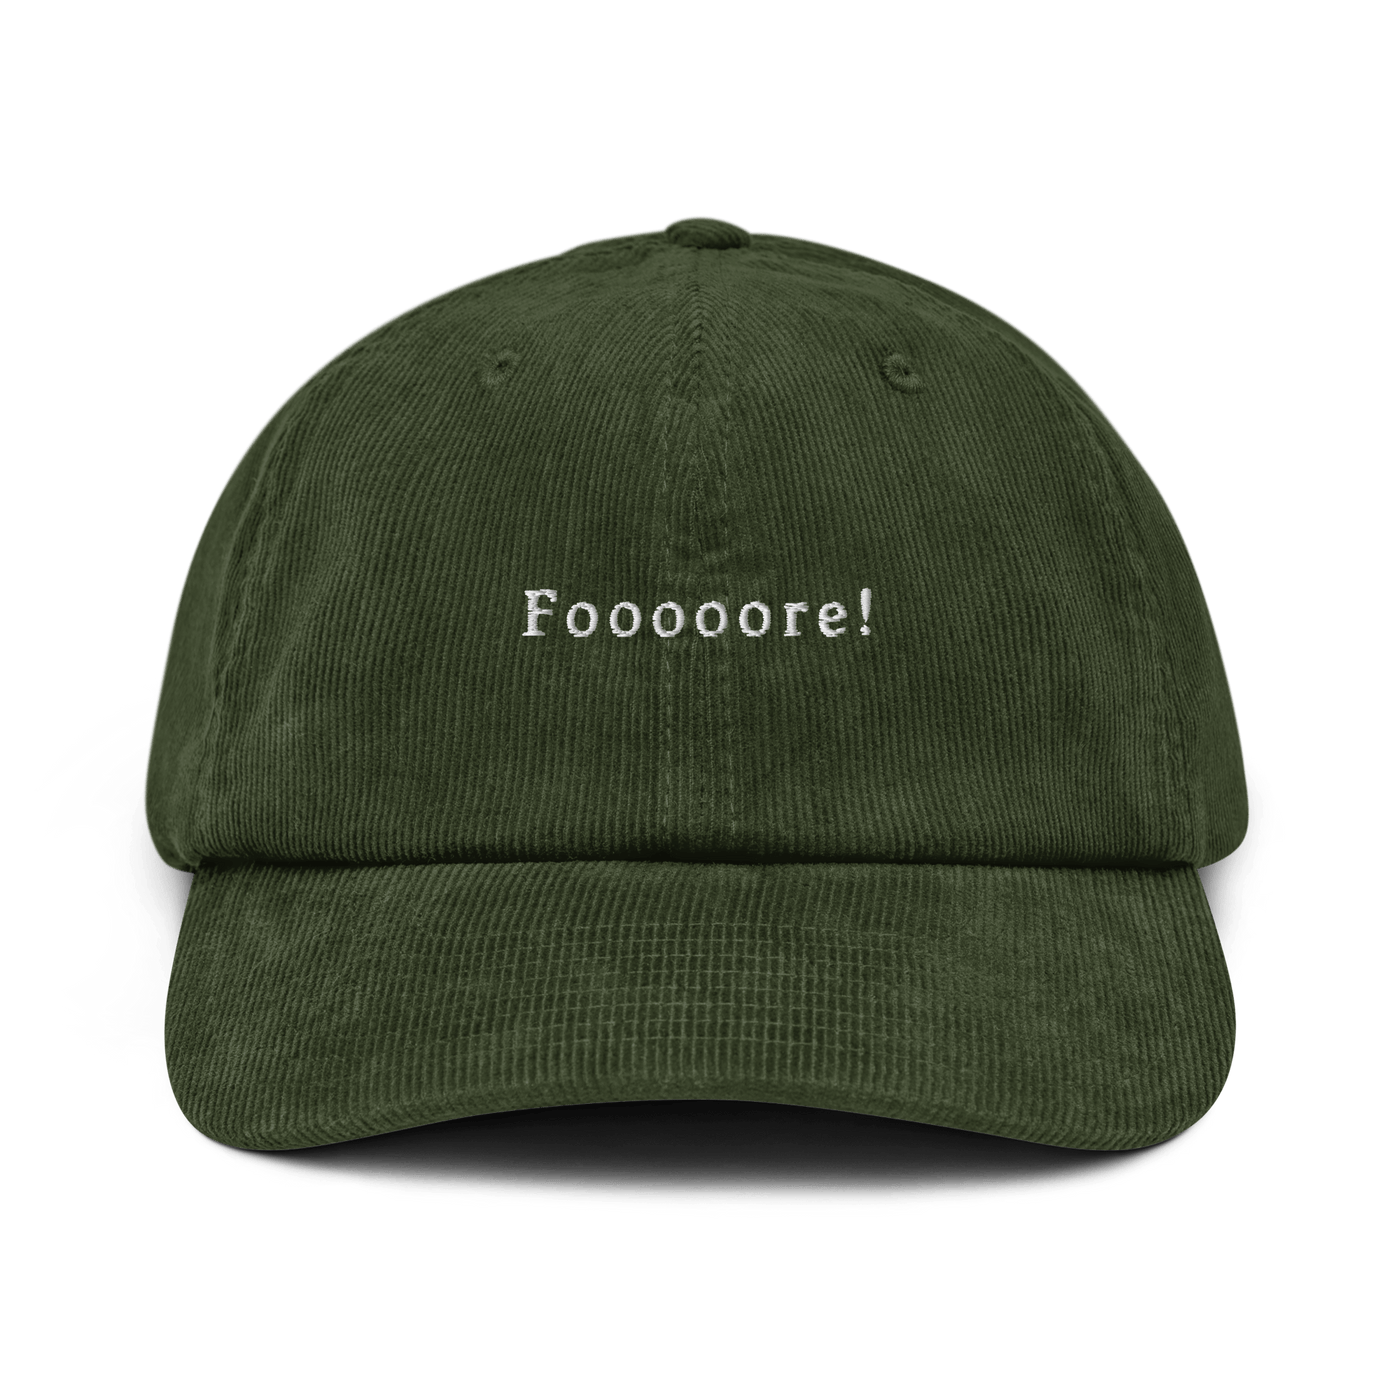 Fooooore! Corduroy hat - Dark Olive - - Just Another Cap Store